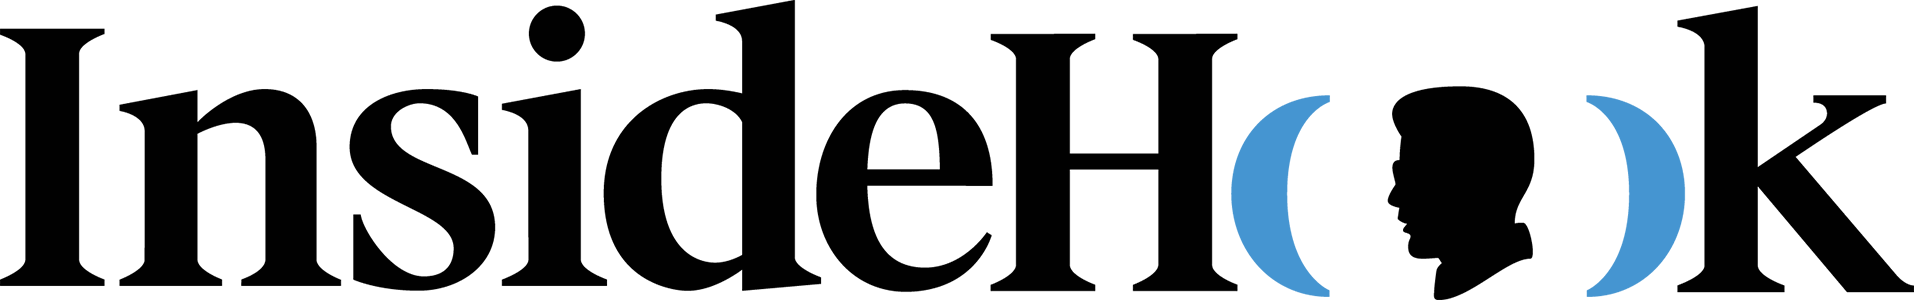 IH_Main_Logo.png